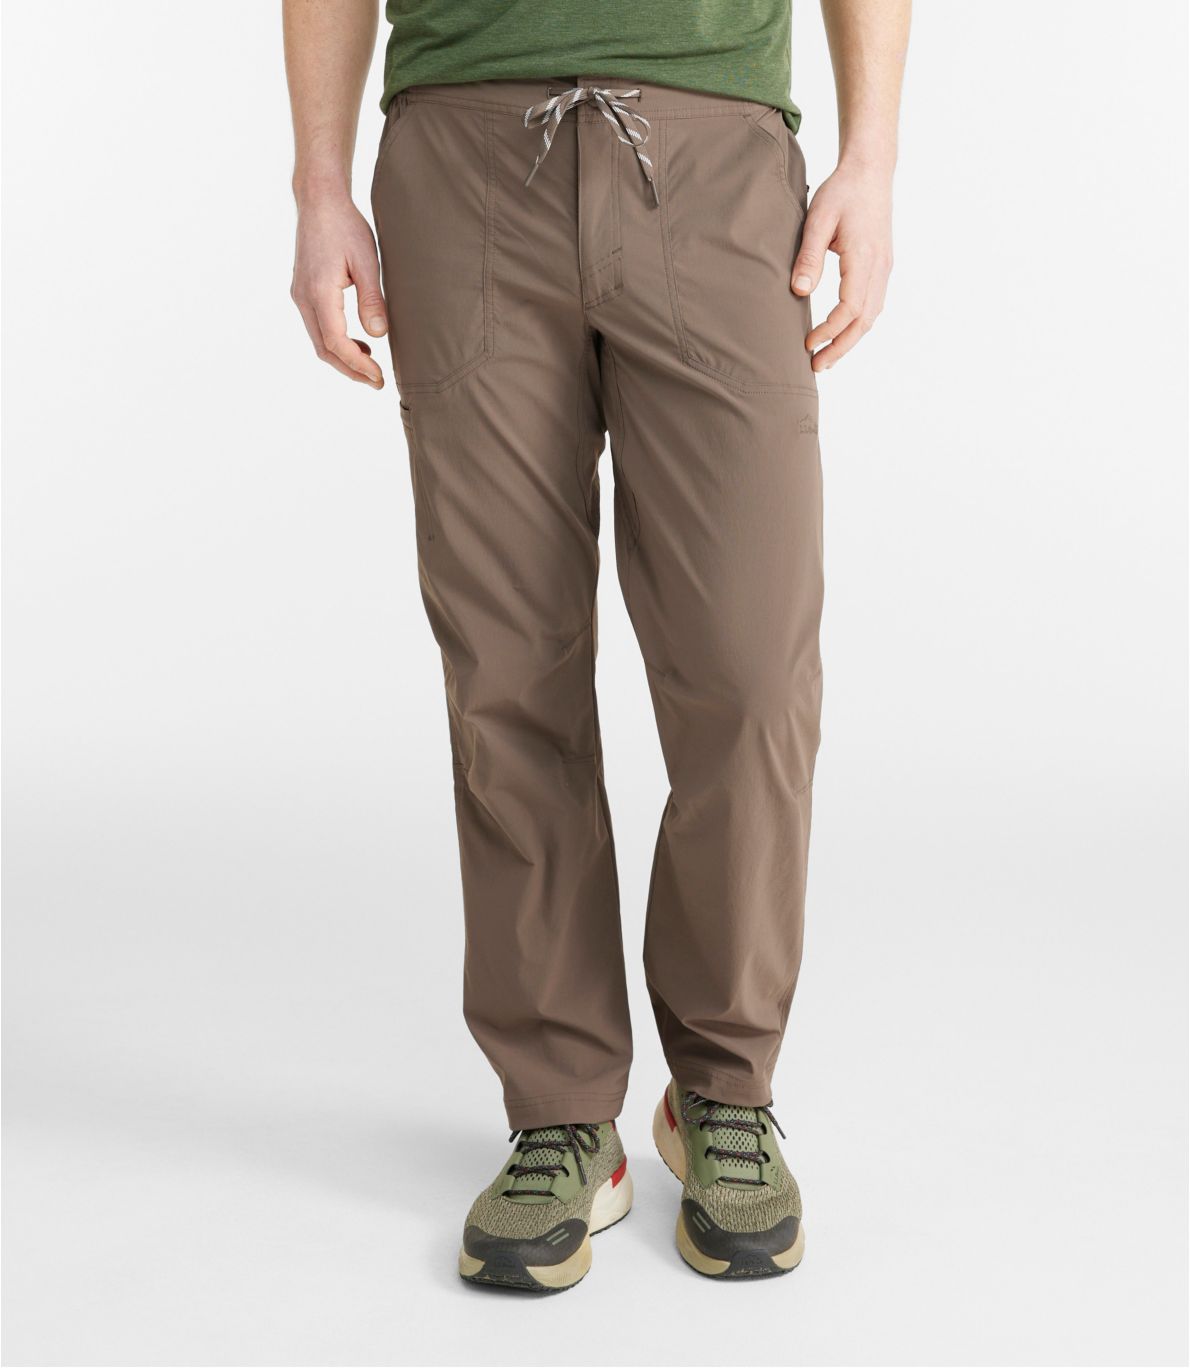 Men's Water-Resistant Cresta Hiking Pull-On Pants, Standard Fit